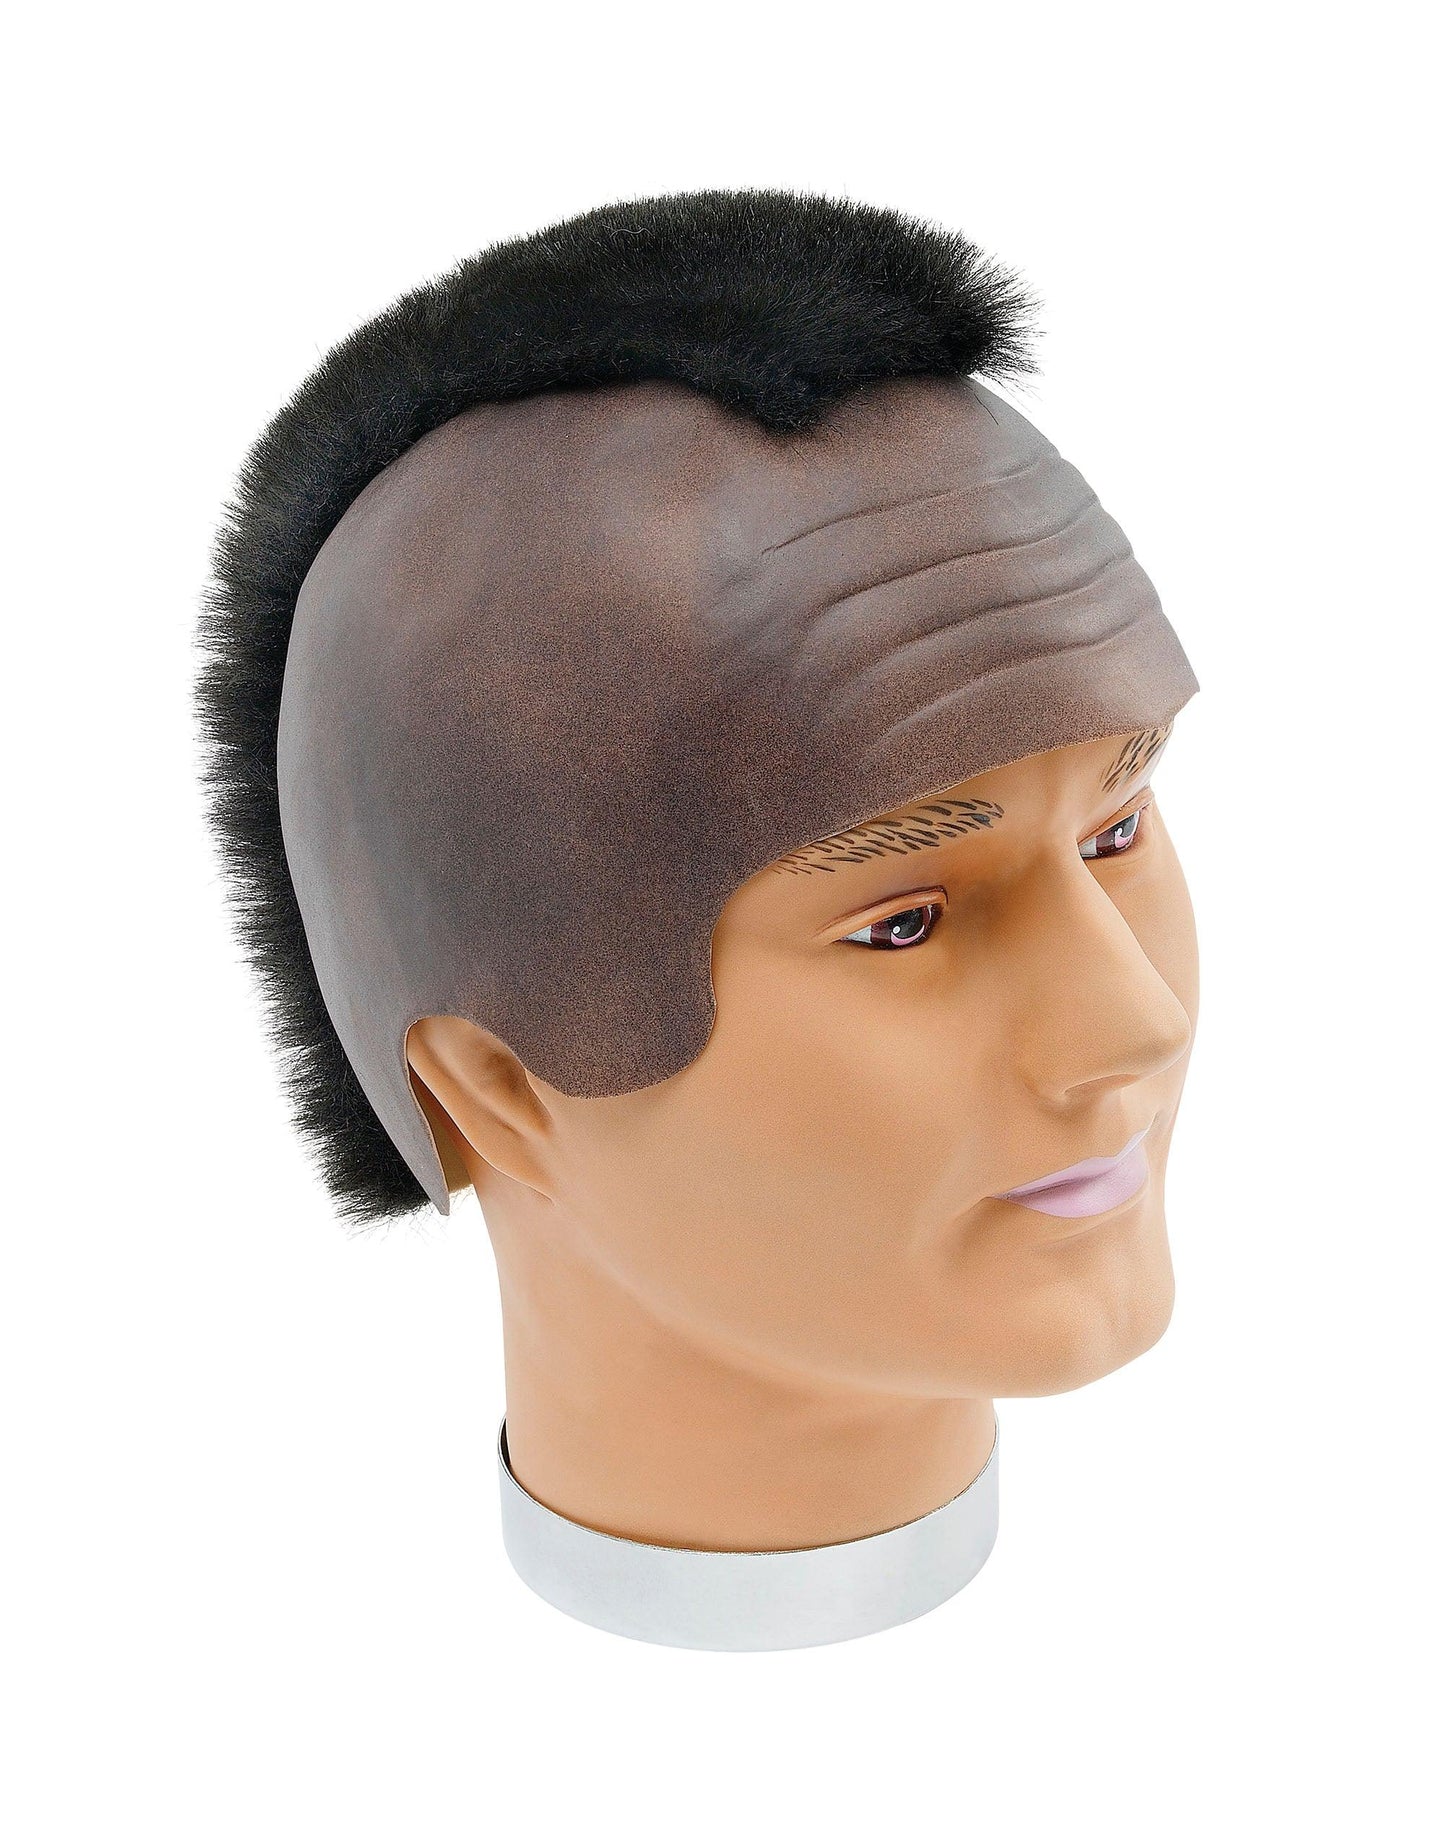 Mr Bling Headpiece - Labreeze